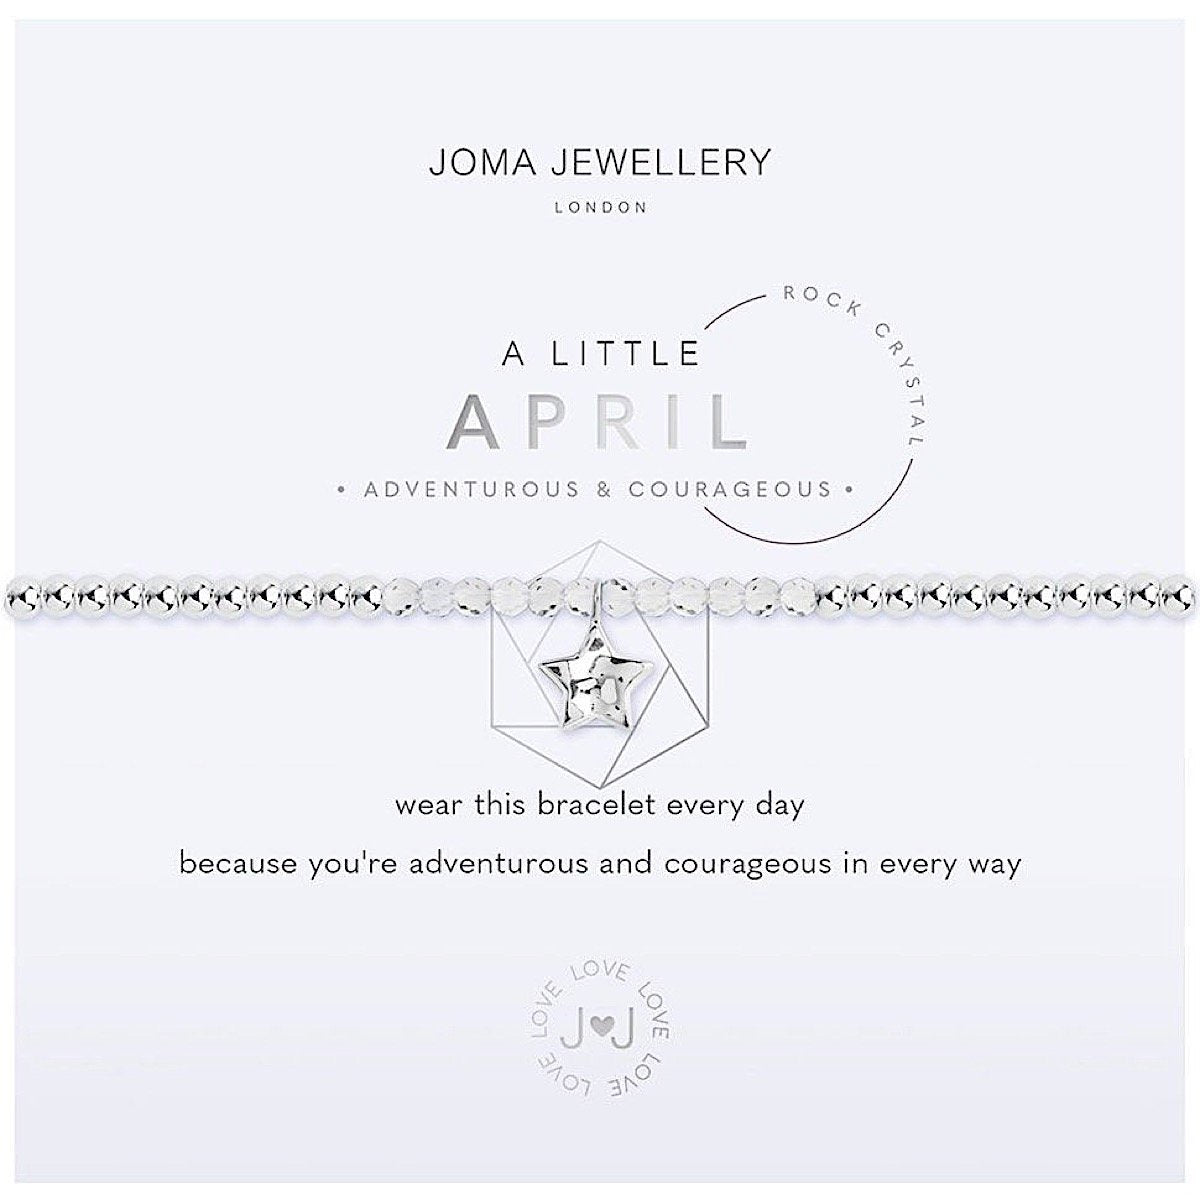 Joma Jewellery - April Birthstone - Rock Crystal - Adventurous & Courageous